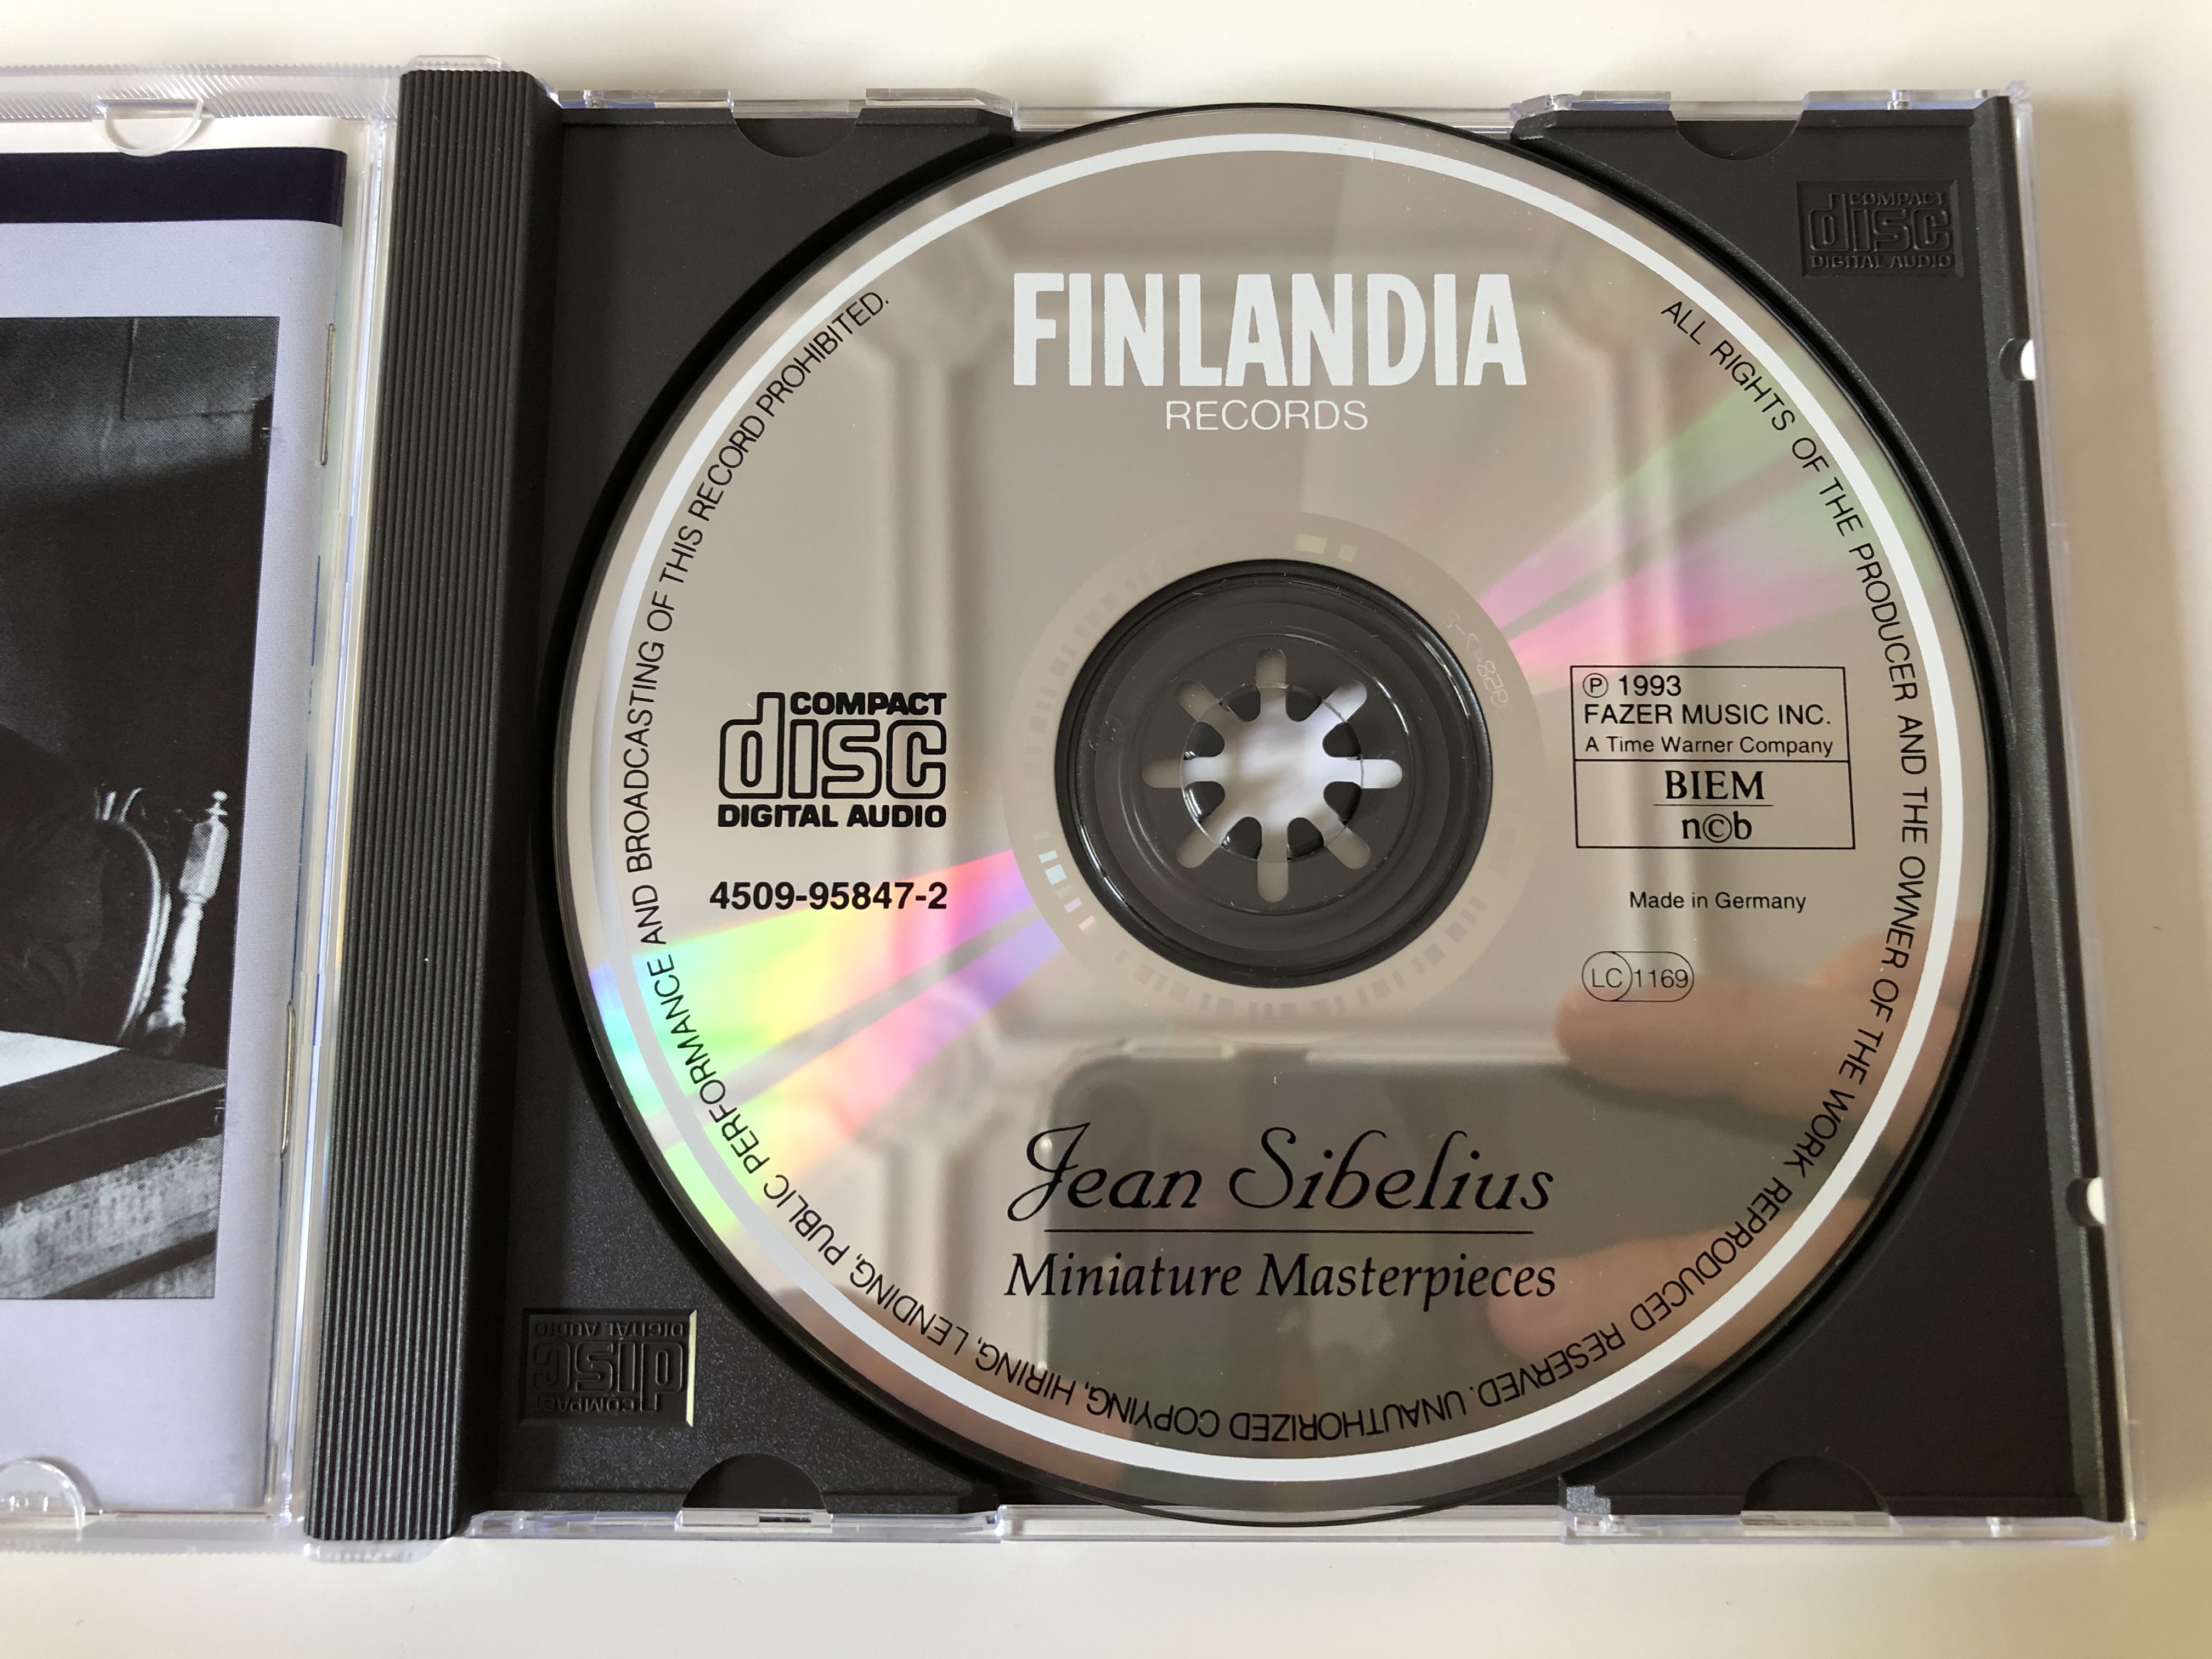 jean-sibelius-miniature-masterpieces-finlandia-records-audio-cd-1993-4509-95847-2-8-.jpg